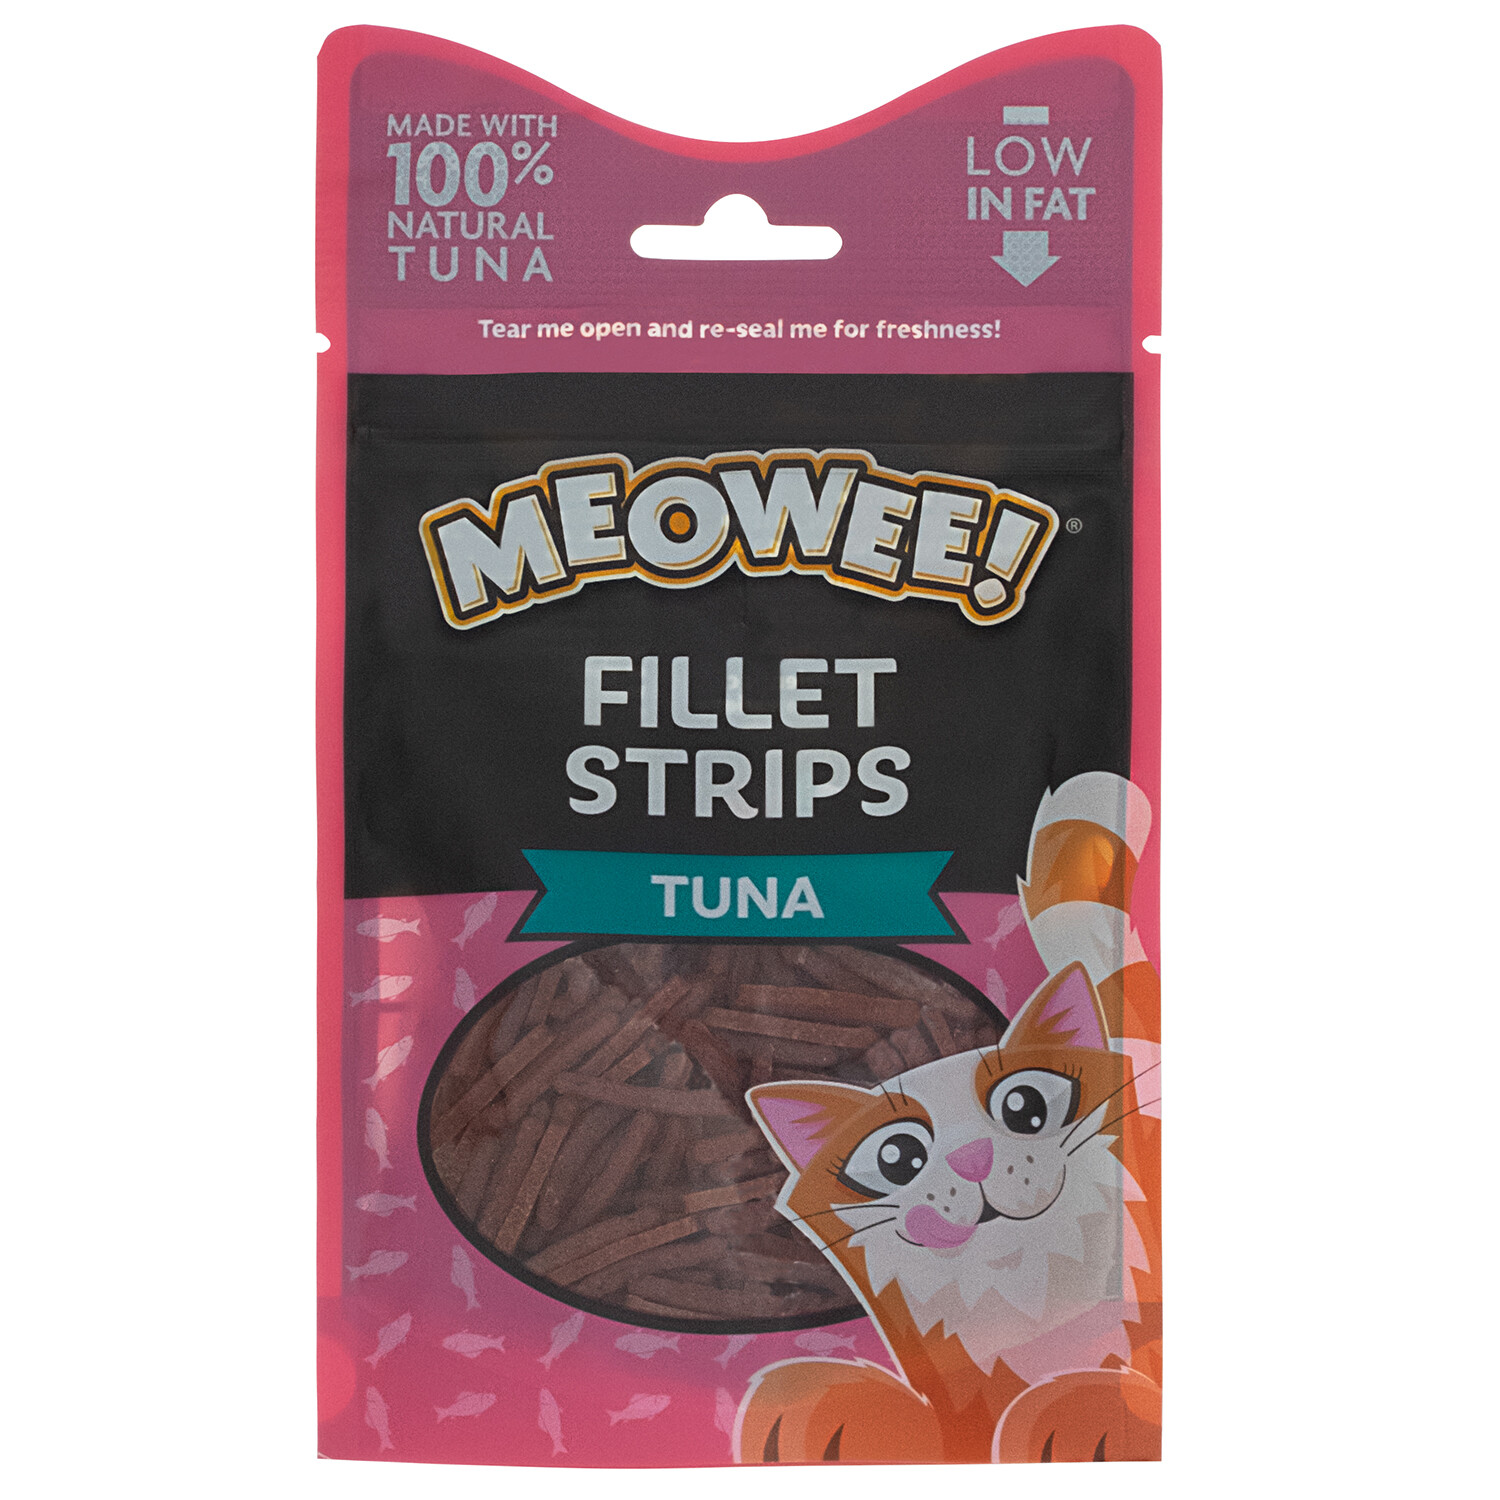 Meowee Fillet Strips Tuna Image